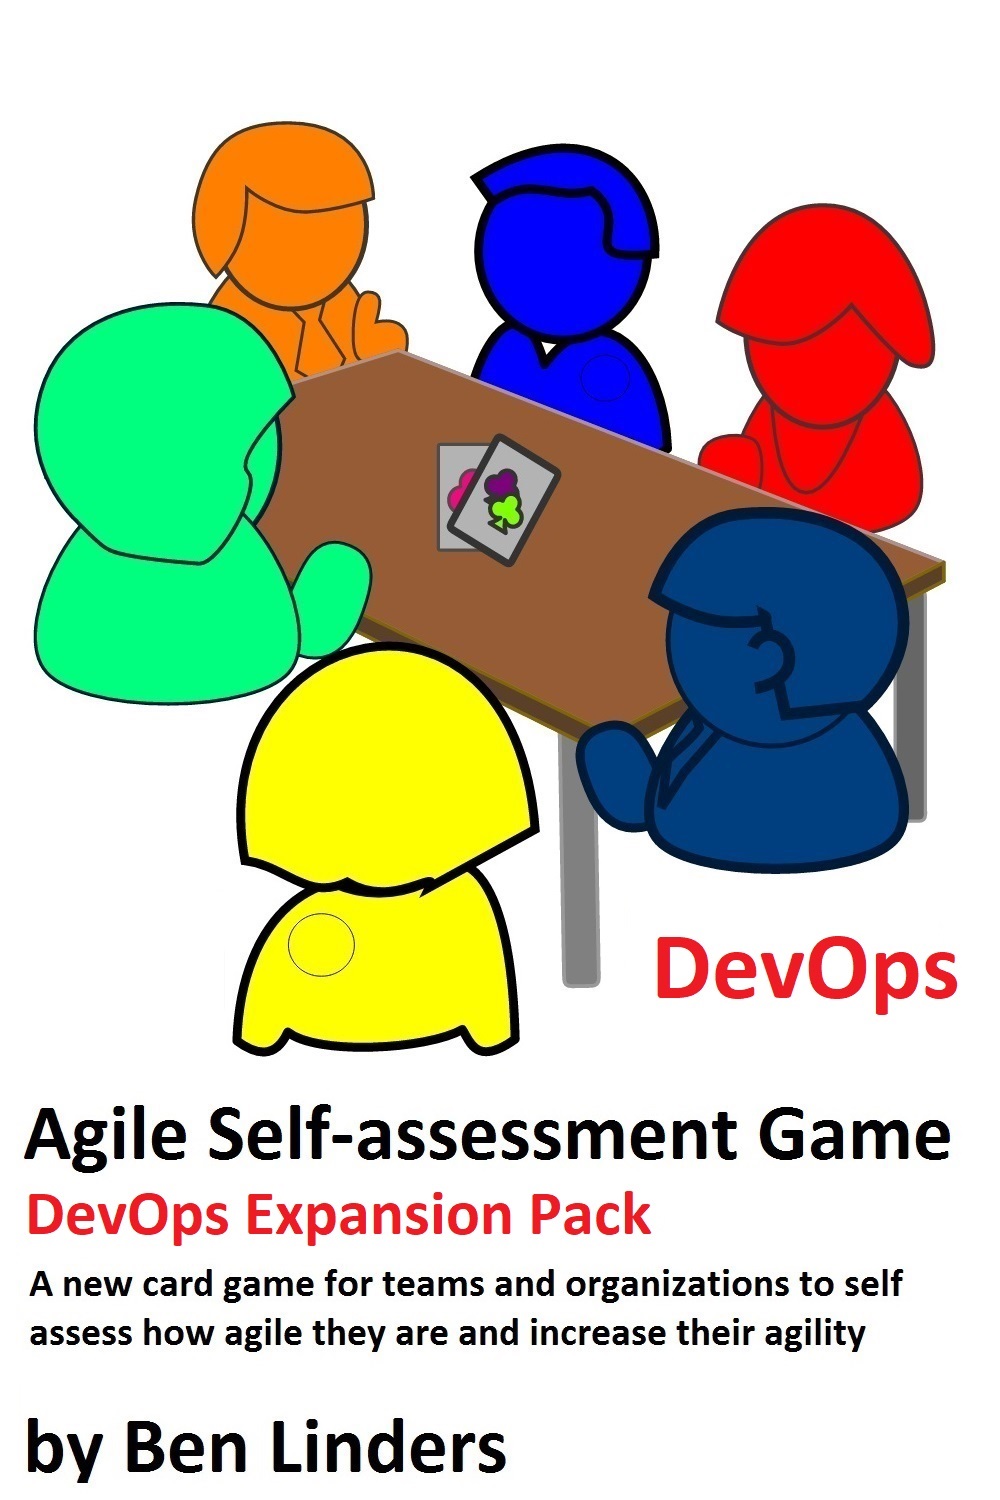 DevOps Expansion Pack for Agile Self-assessment game